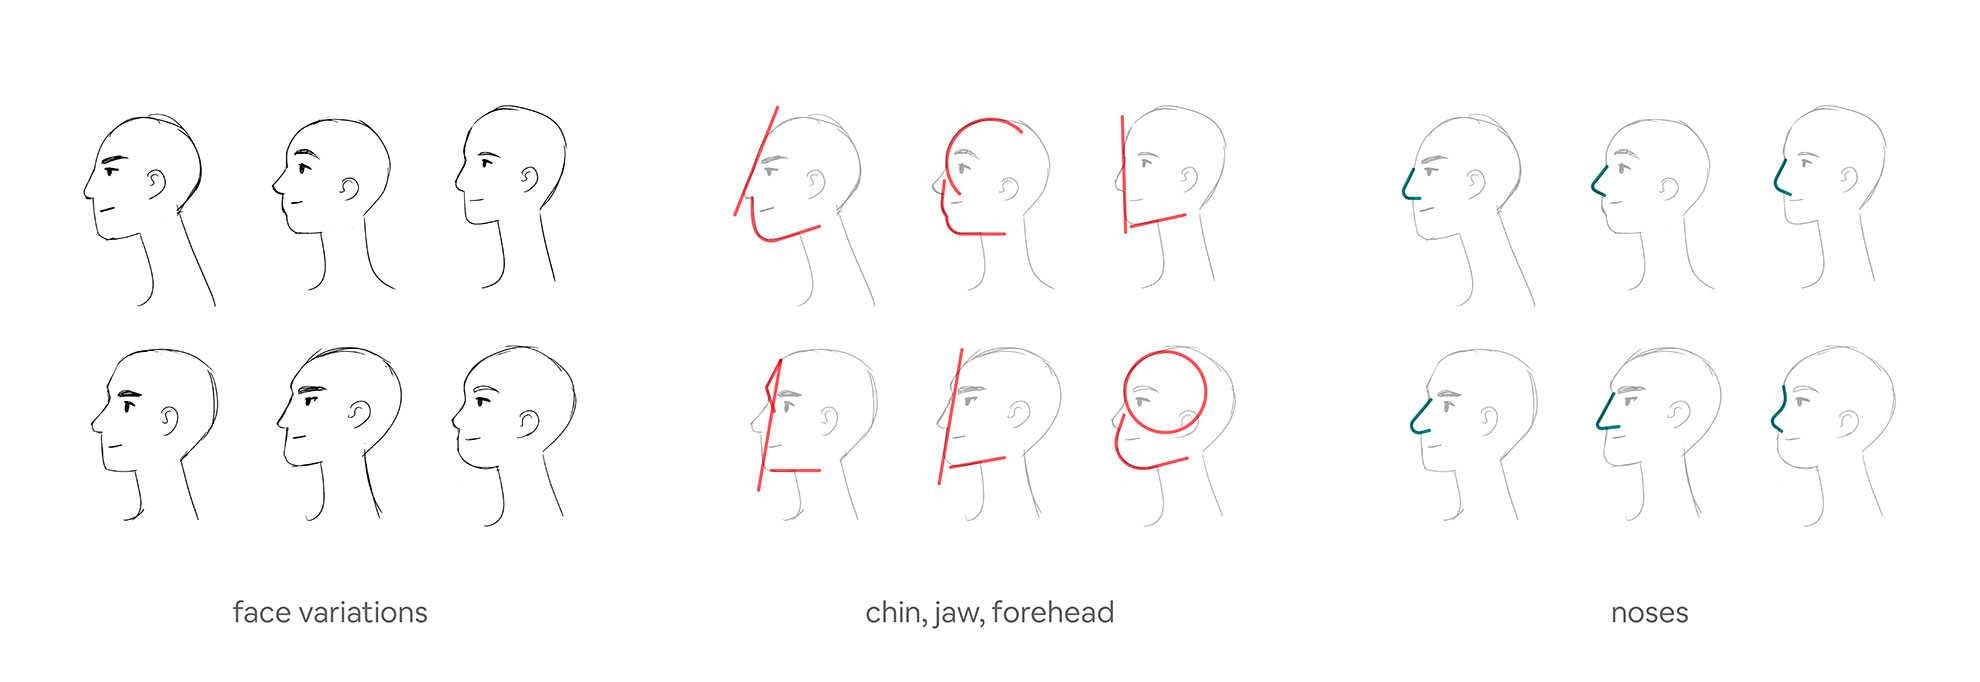 Sketches of facial details